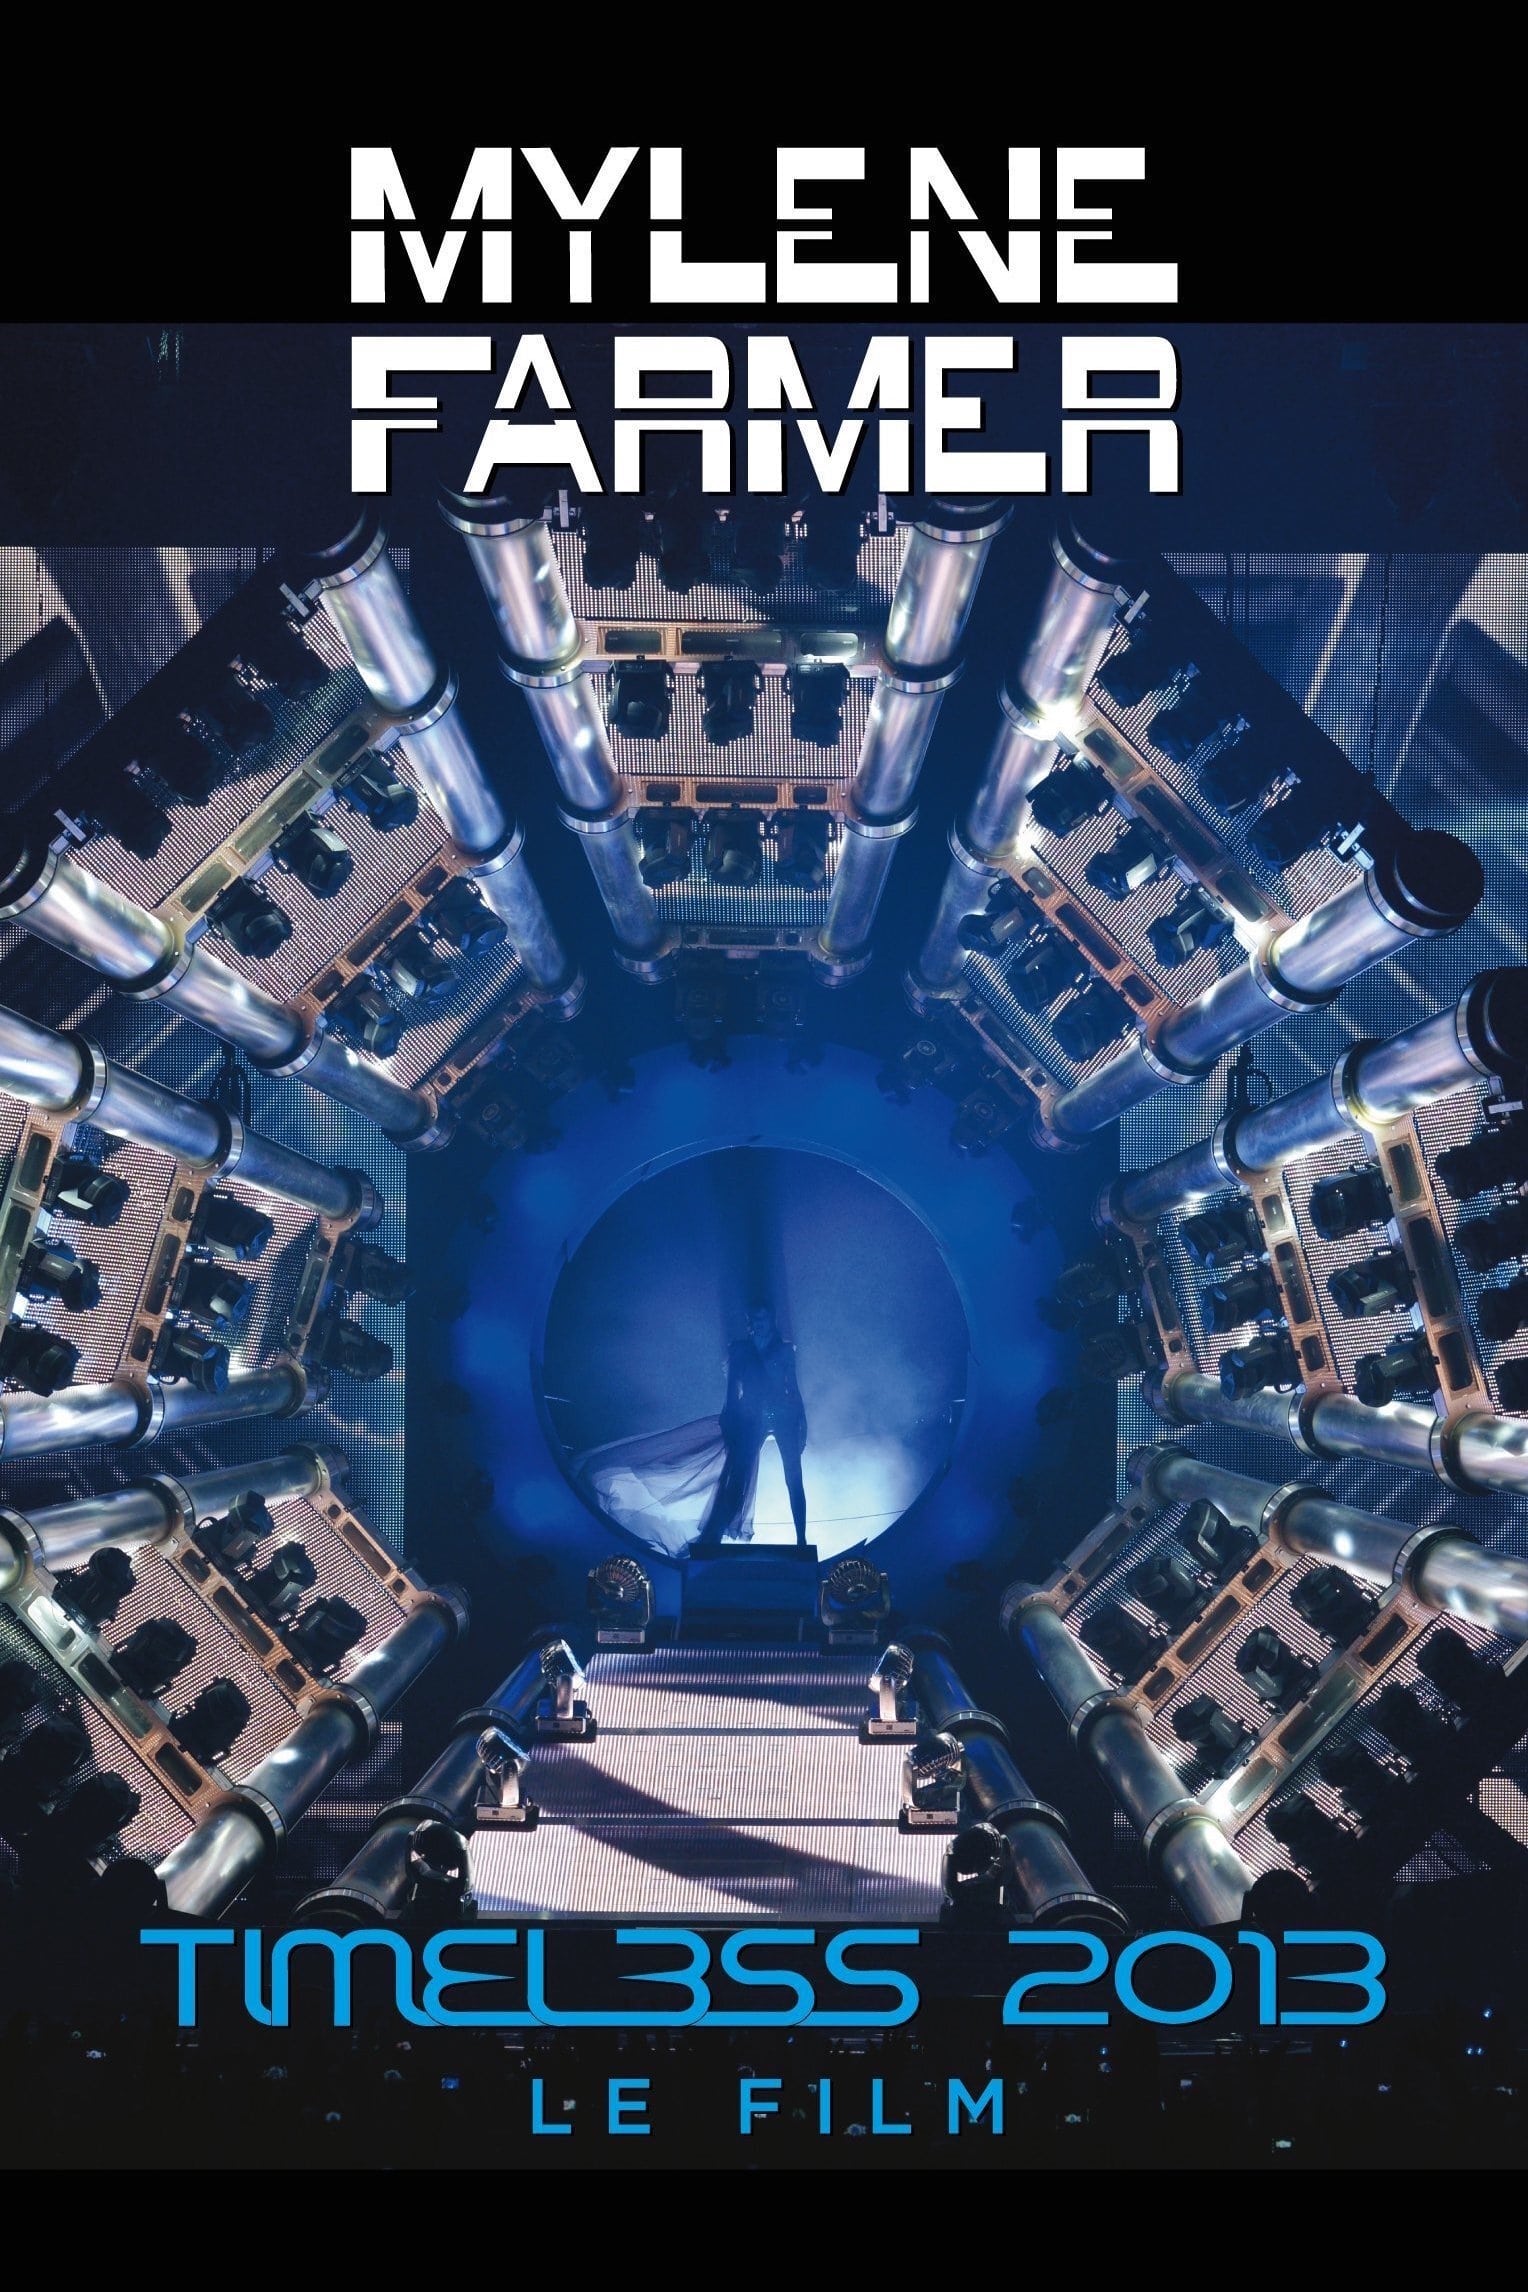 Mylène Farmer : Timeless 2013 - Le Film (2014)